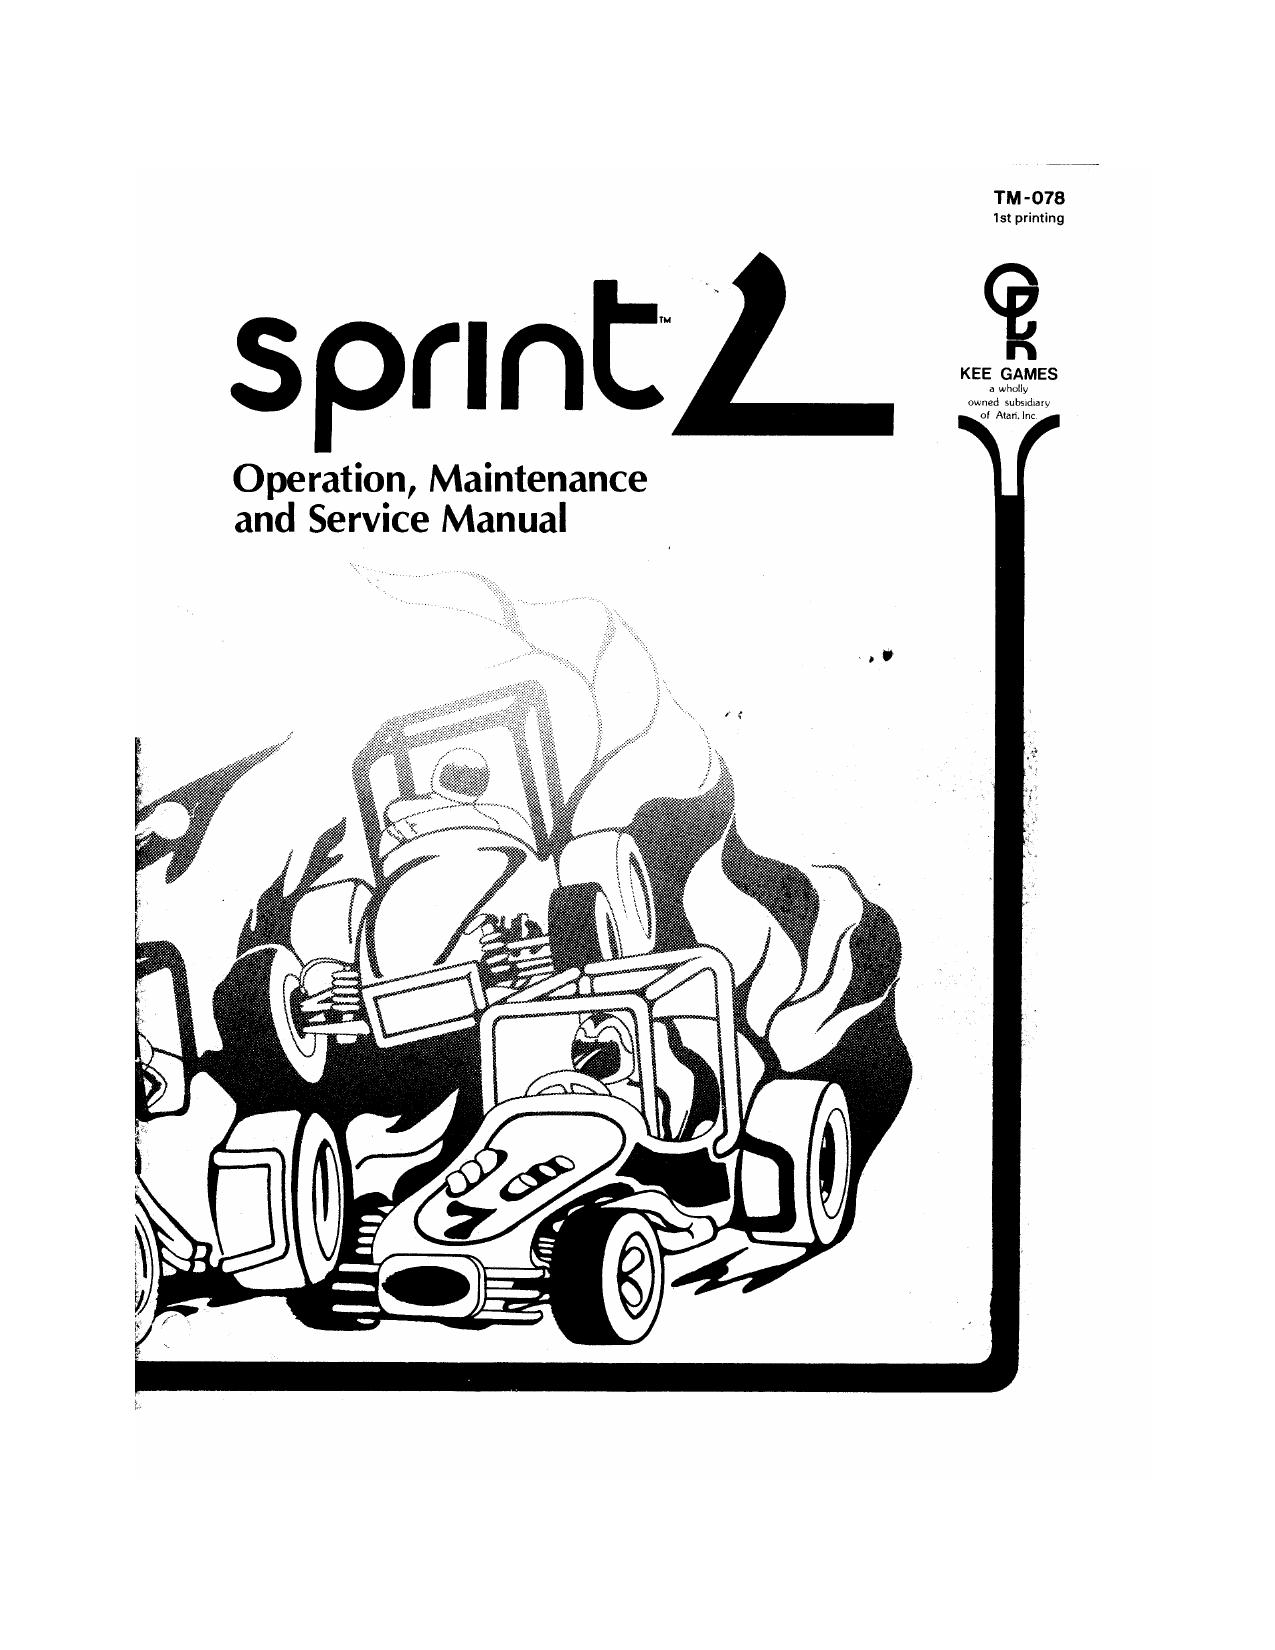 Sprint 2 TM-078